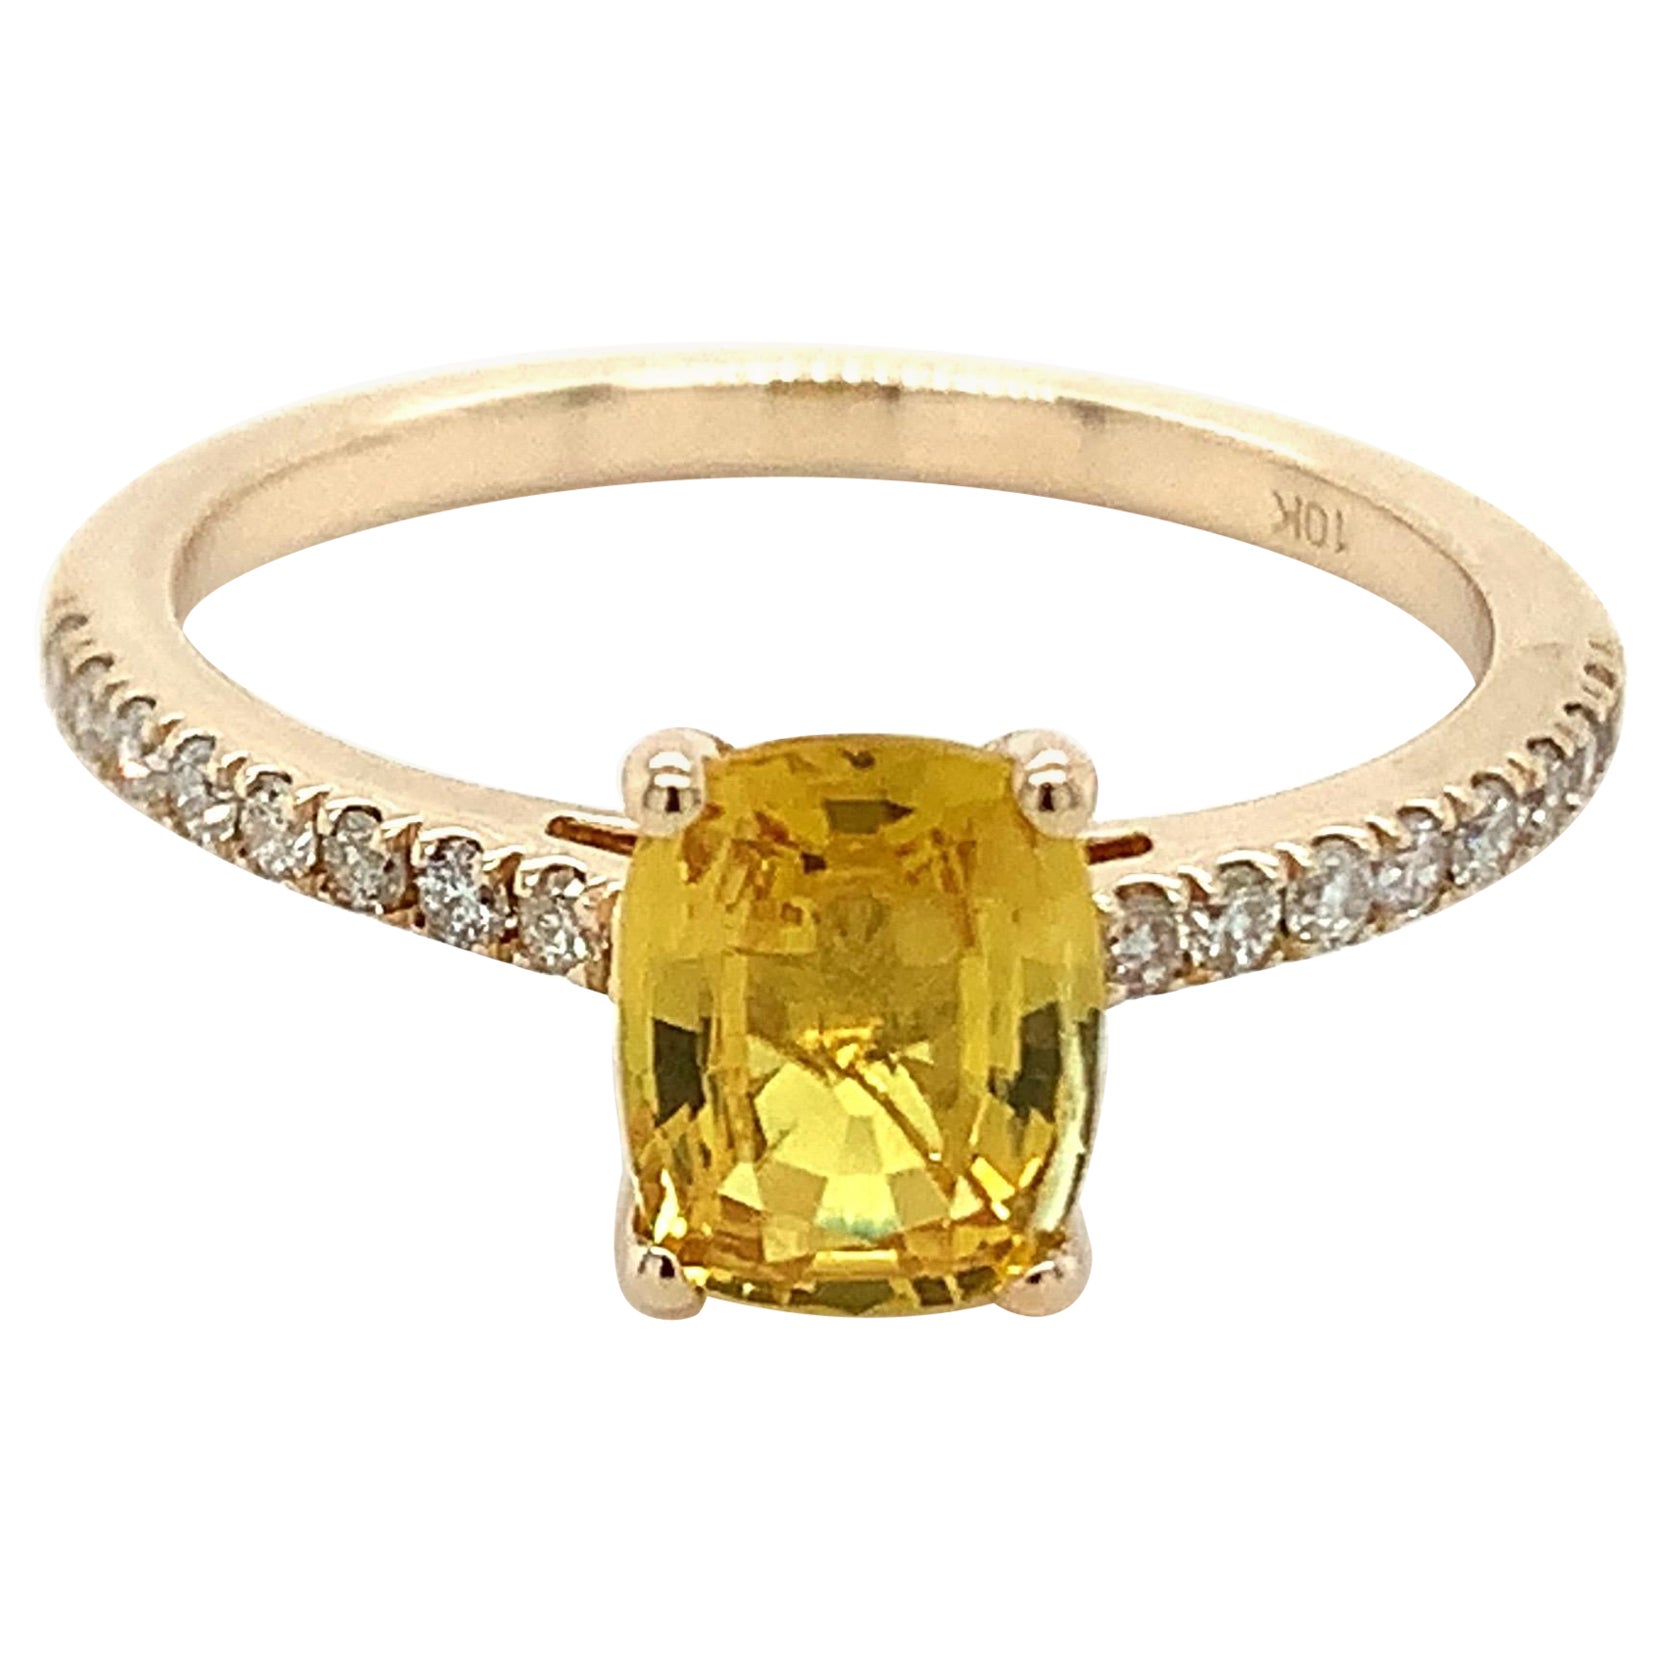 1.31 Carat Cushion Cut Yellow Sapphire Ring with Diamonds in 10k Yellow Gold